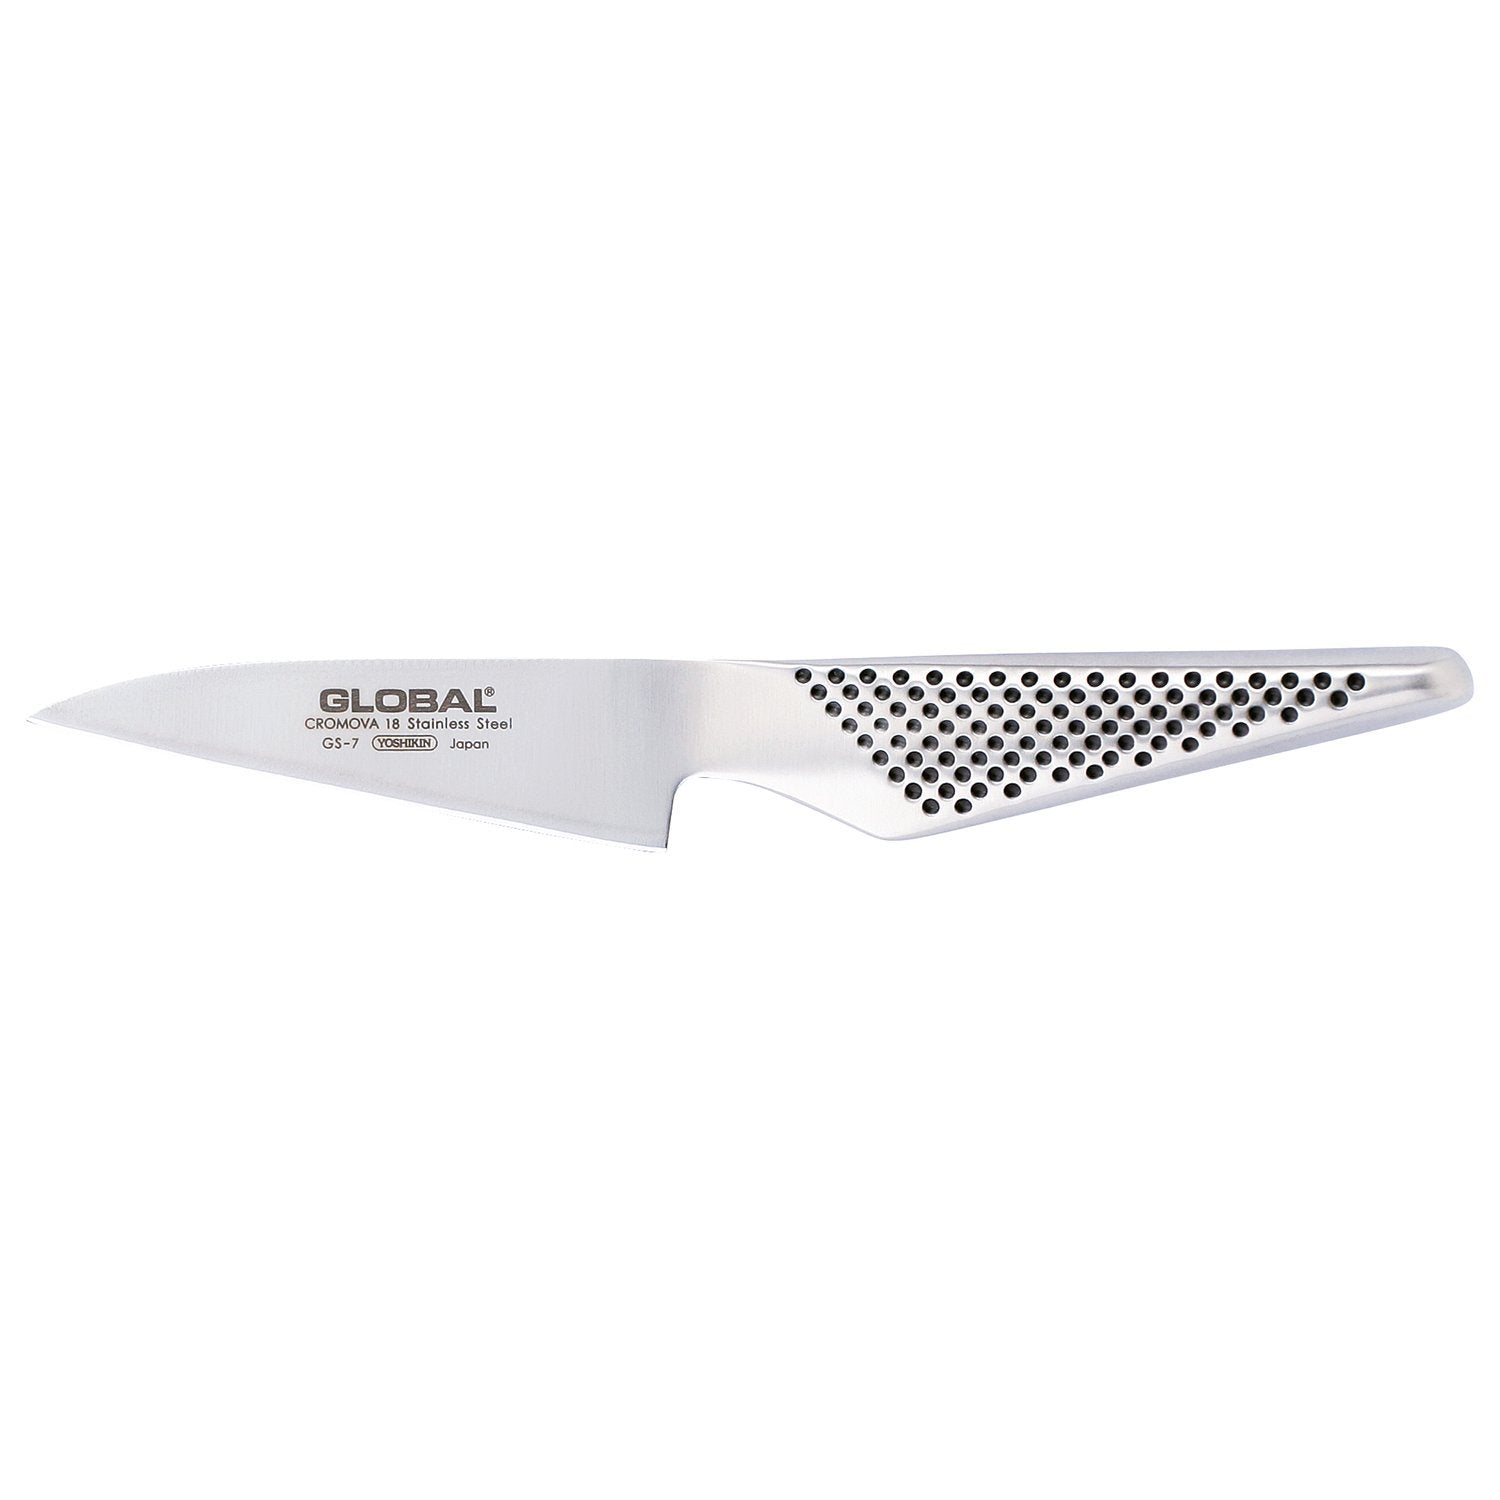 Global GS 7 paring kniv, 10 cm